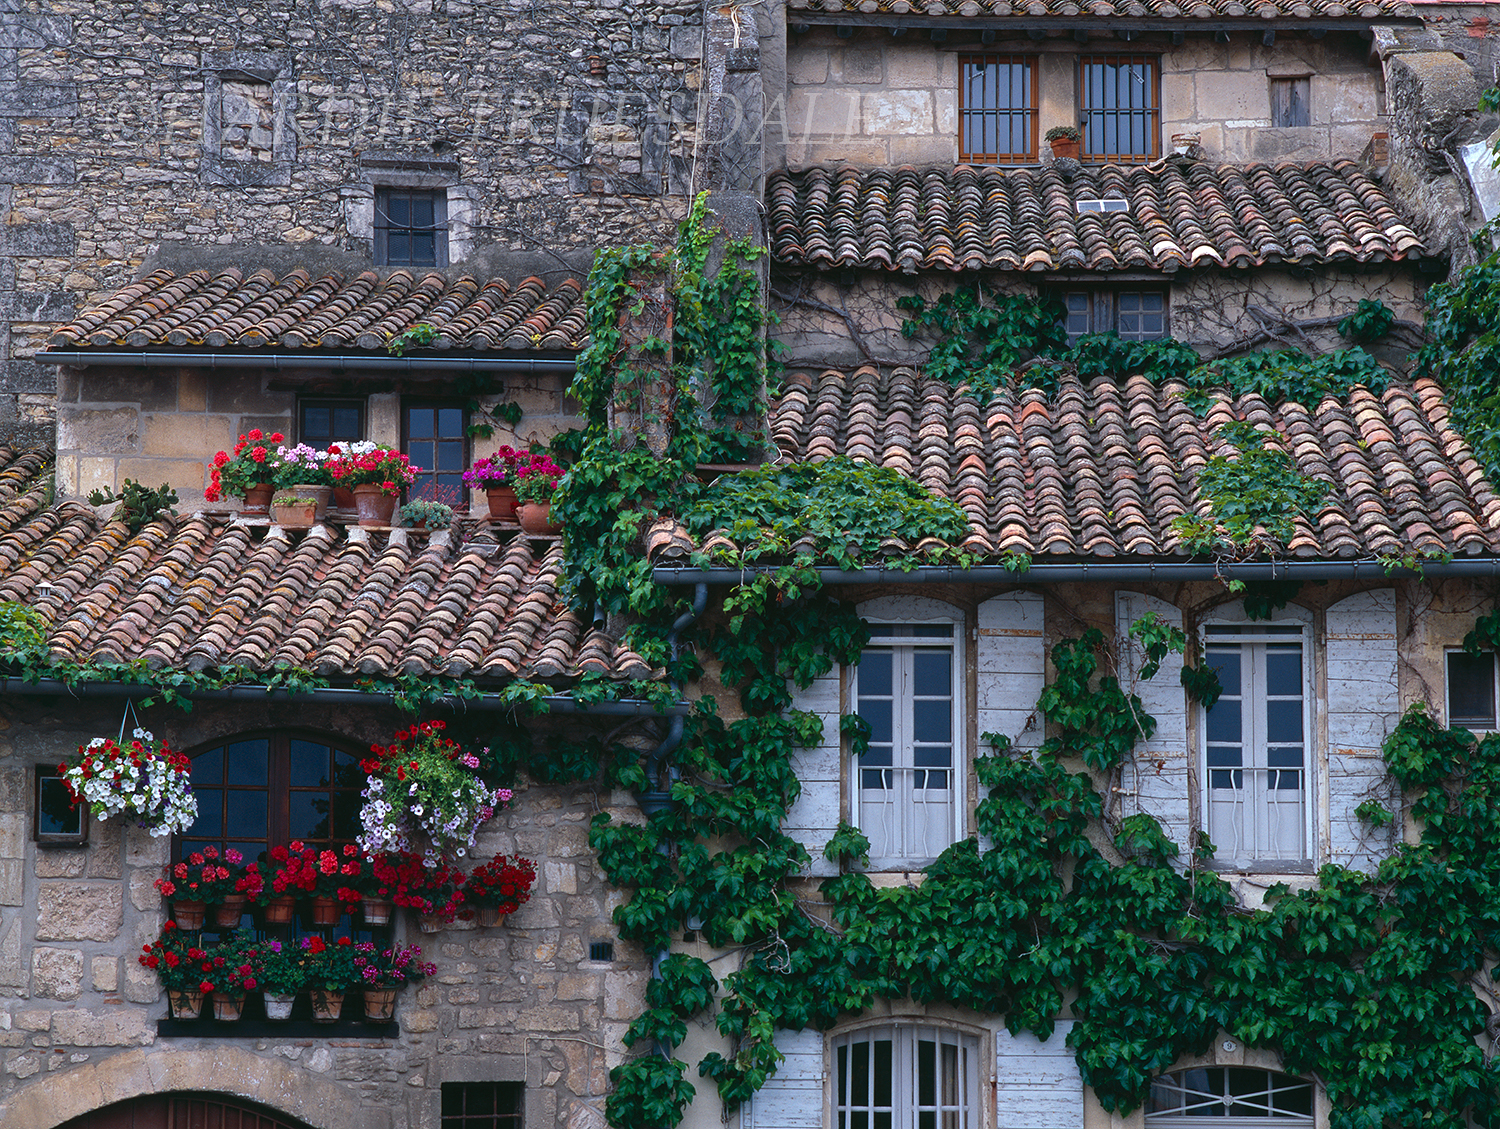  Fr#7 "Windows of Arles", Provence, France 